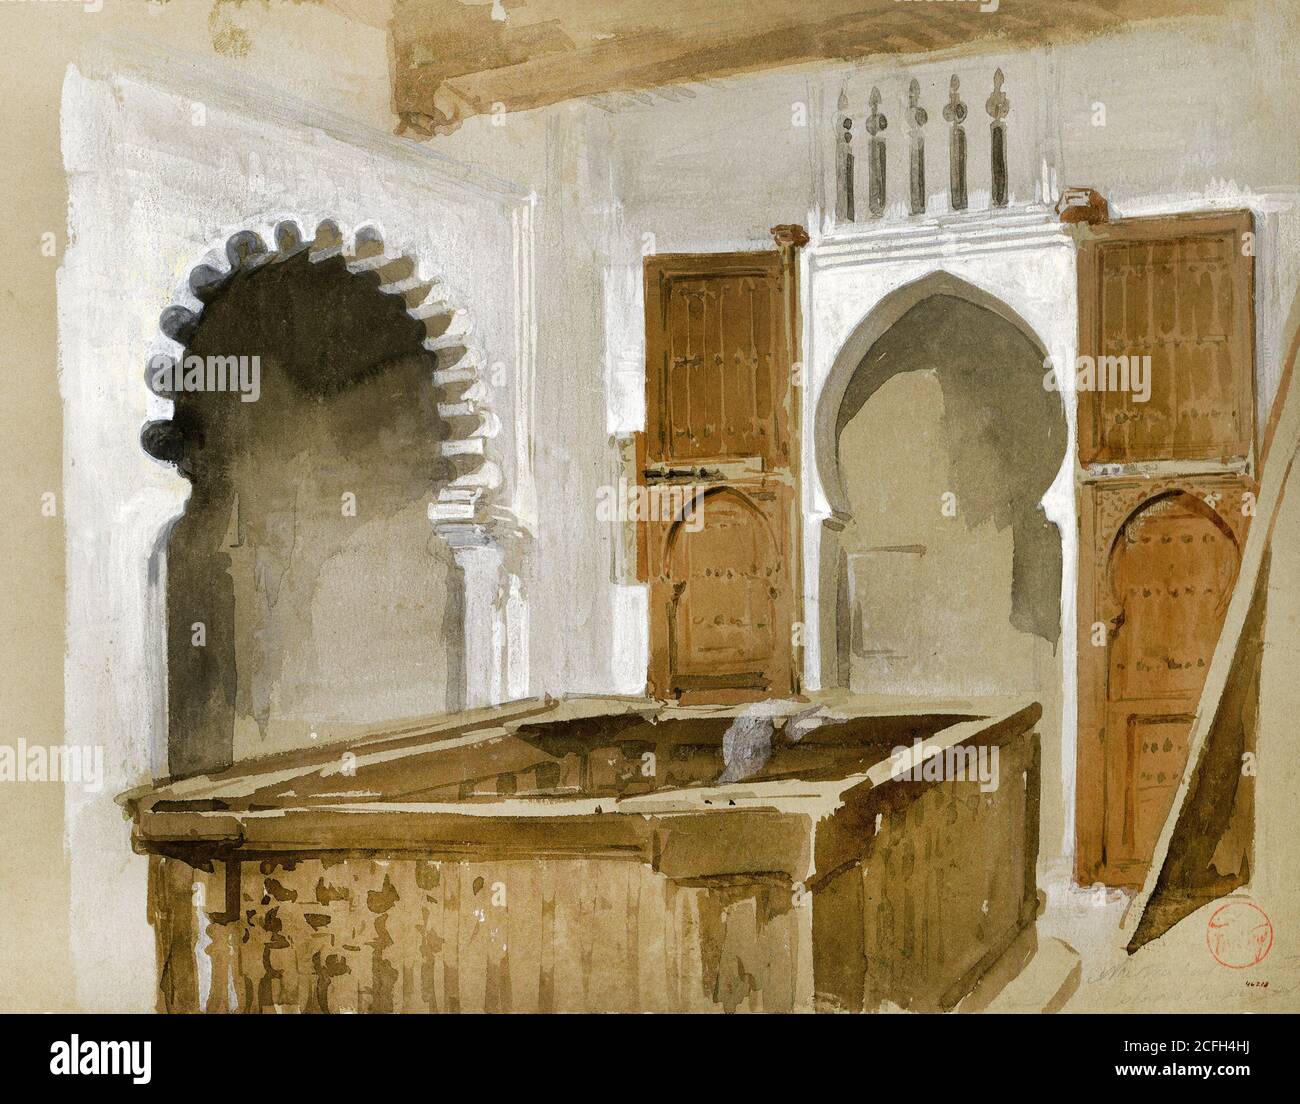 Maria Fortuny, Unser Haus in Tetouan 1860 Aquarell und Gouache auf Papier, Museu Nacional d'Art de Catalunya, Barcelona, Spanien. Stockfoto